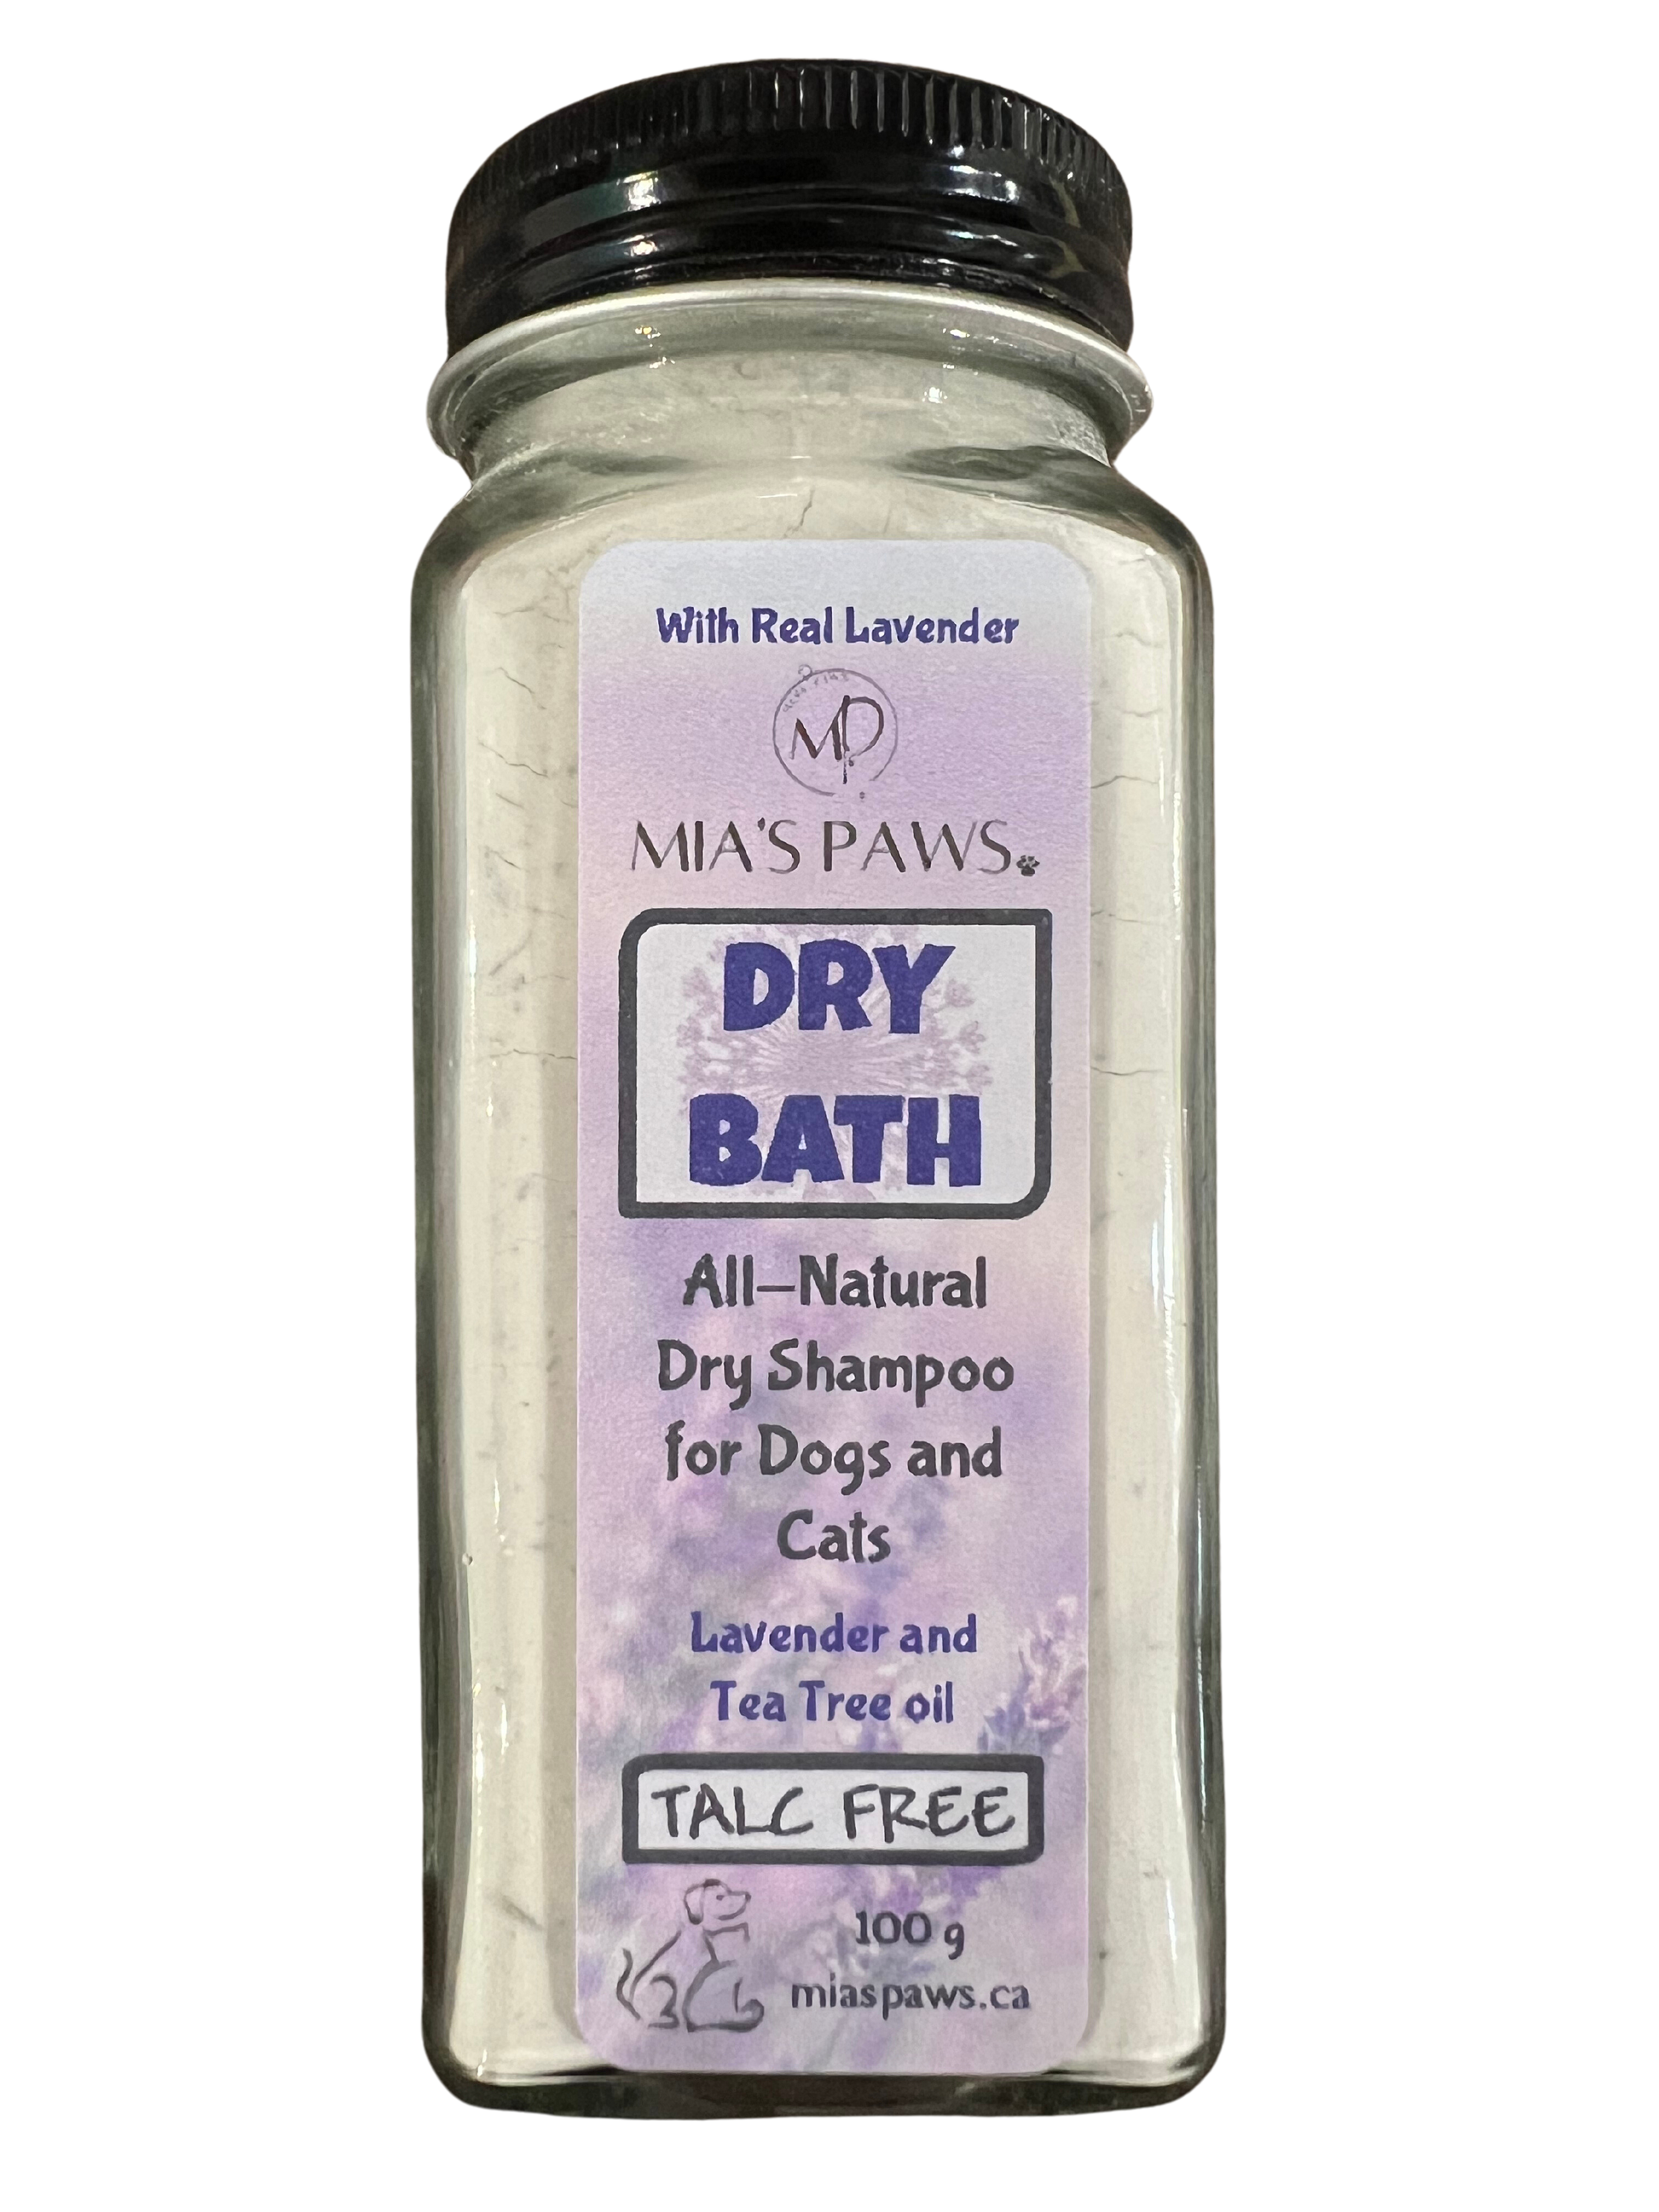 Dry Bath (Dry Shampoo) - Mia's Paws